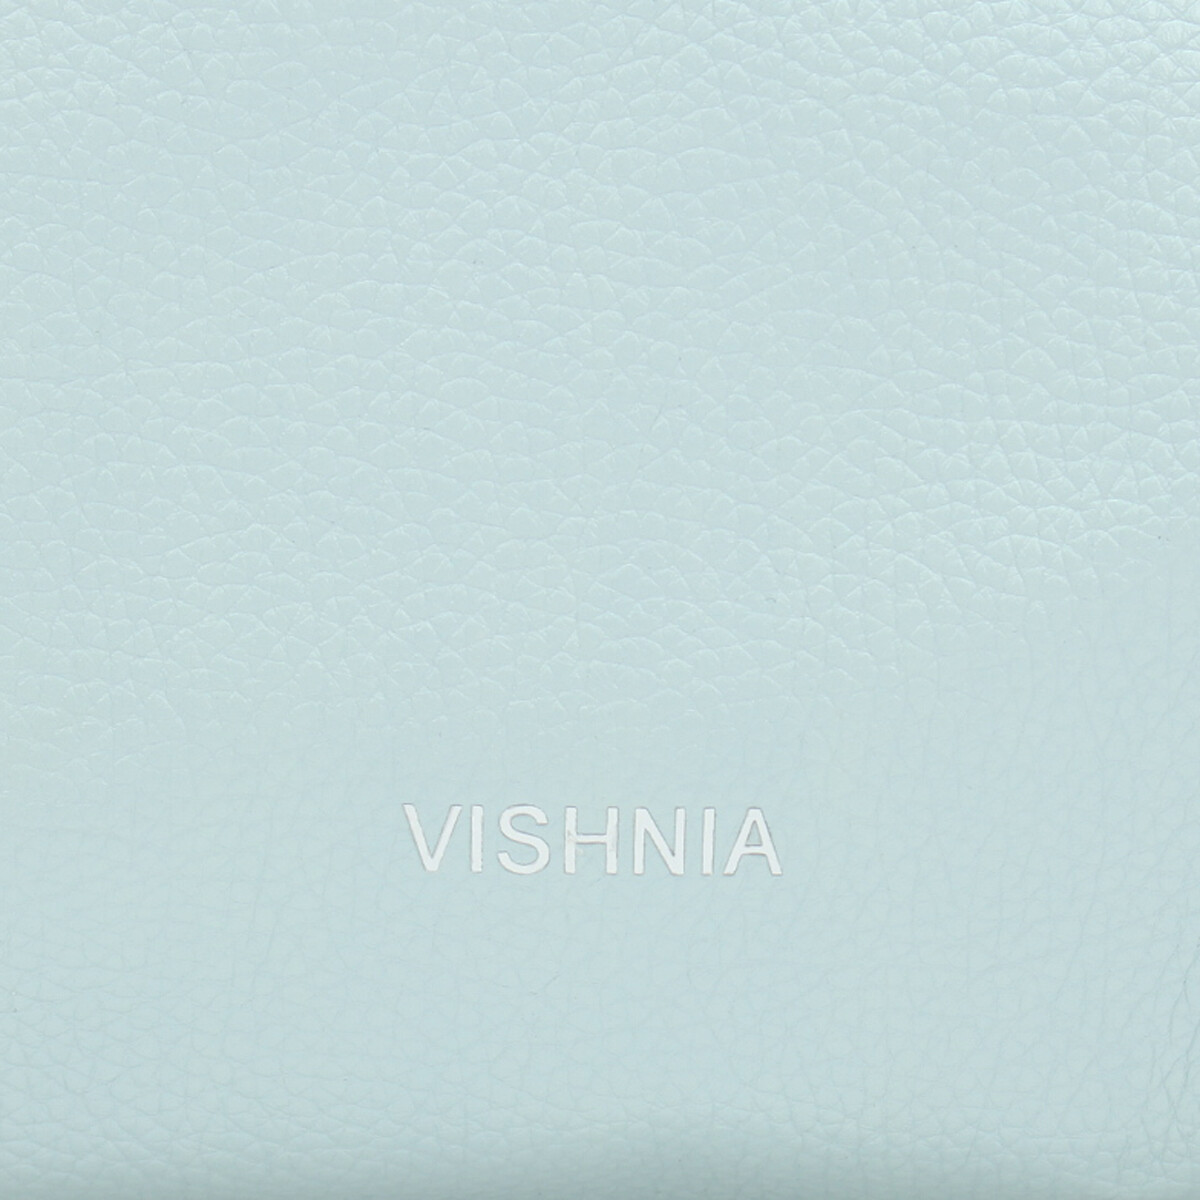 Сумка Vishnia, цвет голубой, размер средний 011113990 - фото 4